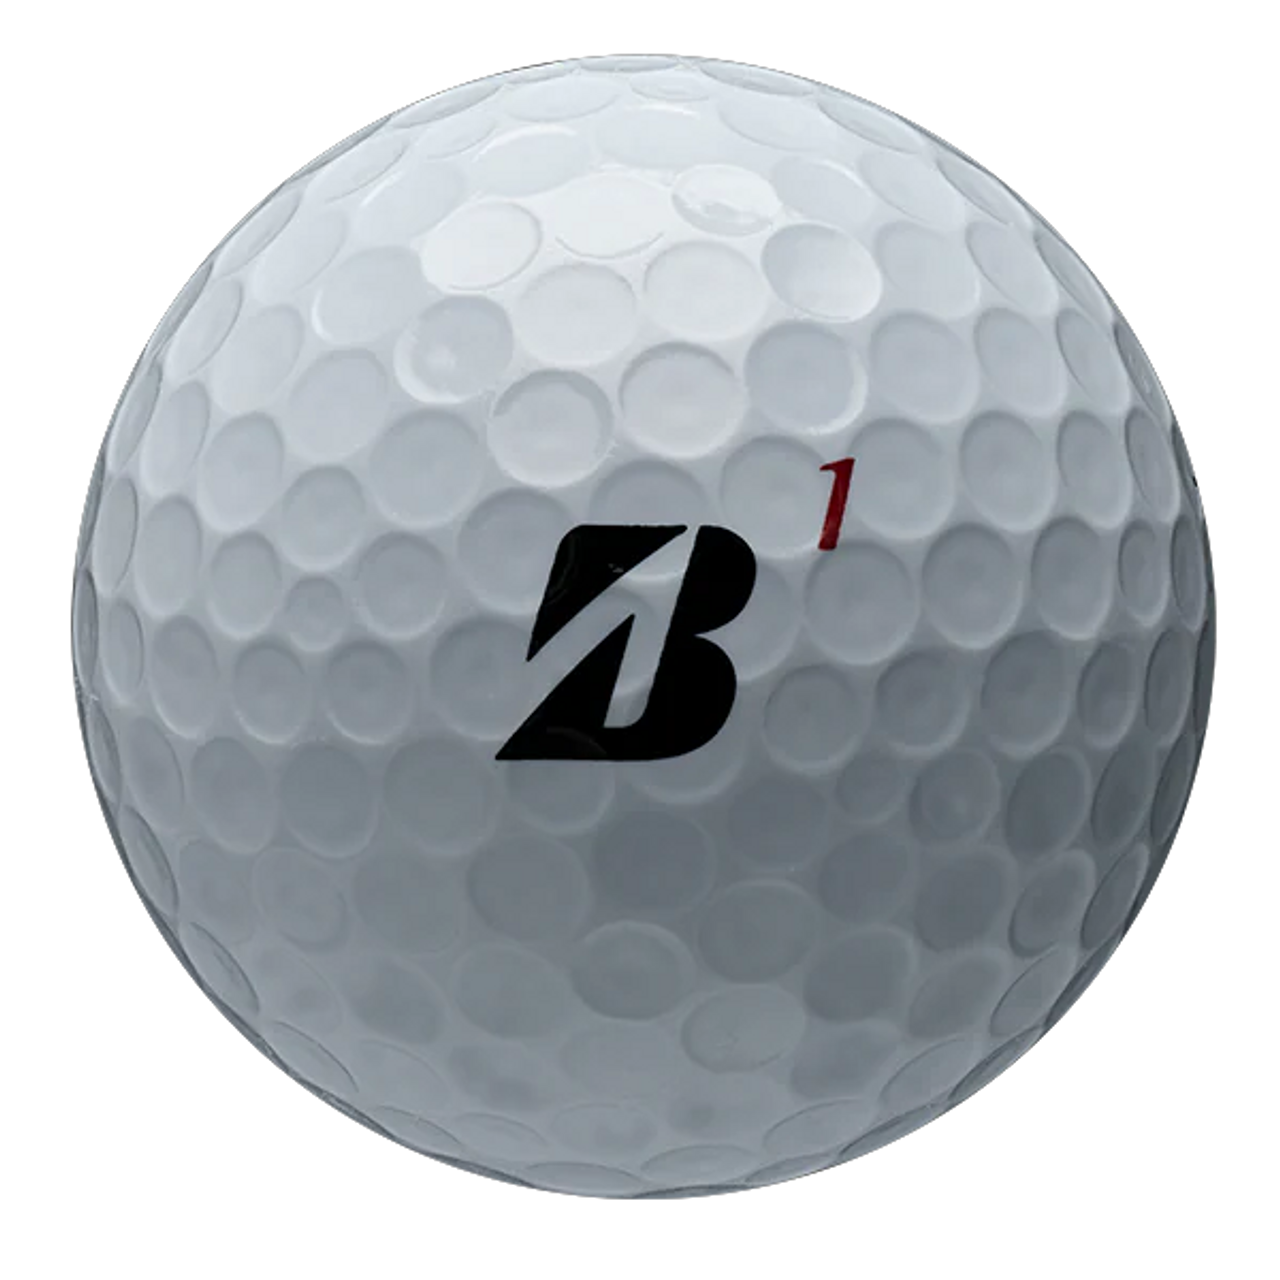 Bridgestone - Tour B X Golf Balls | Morton Golf Sales